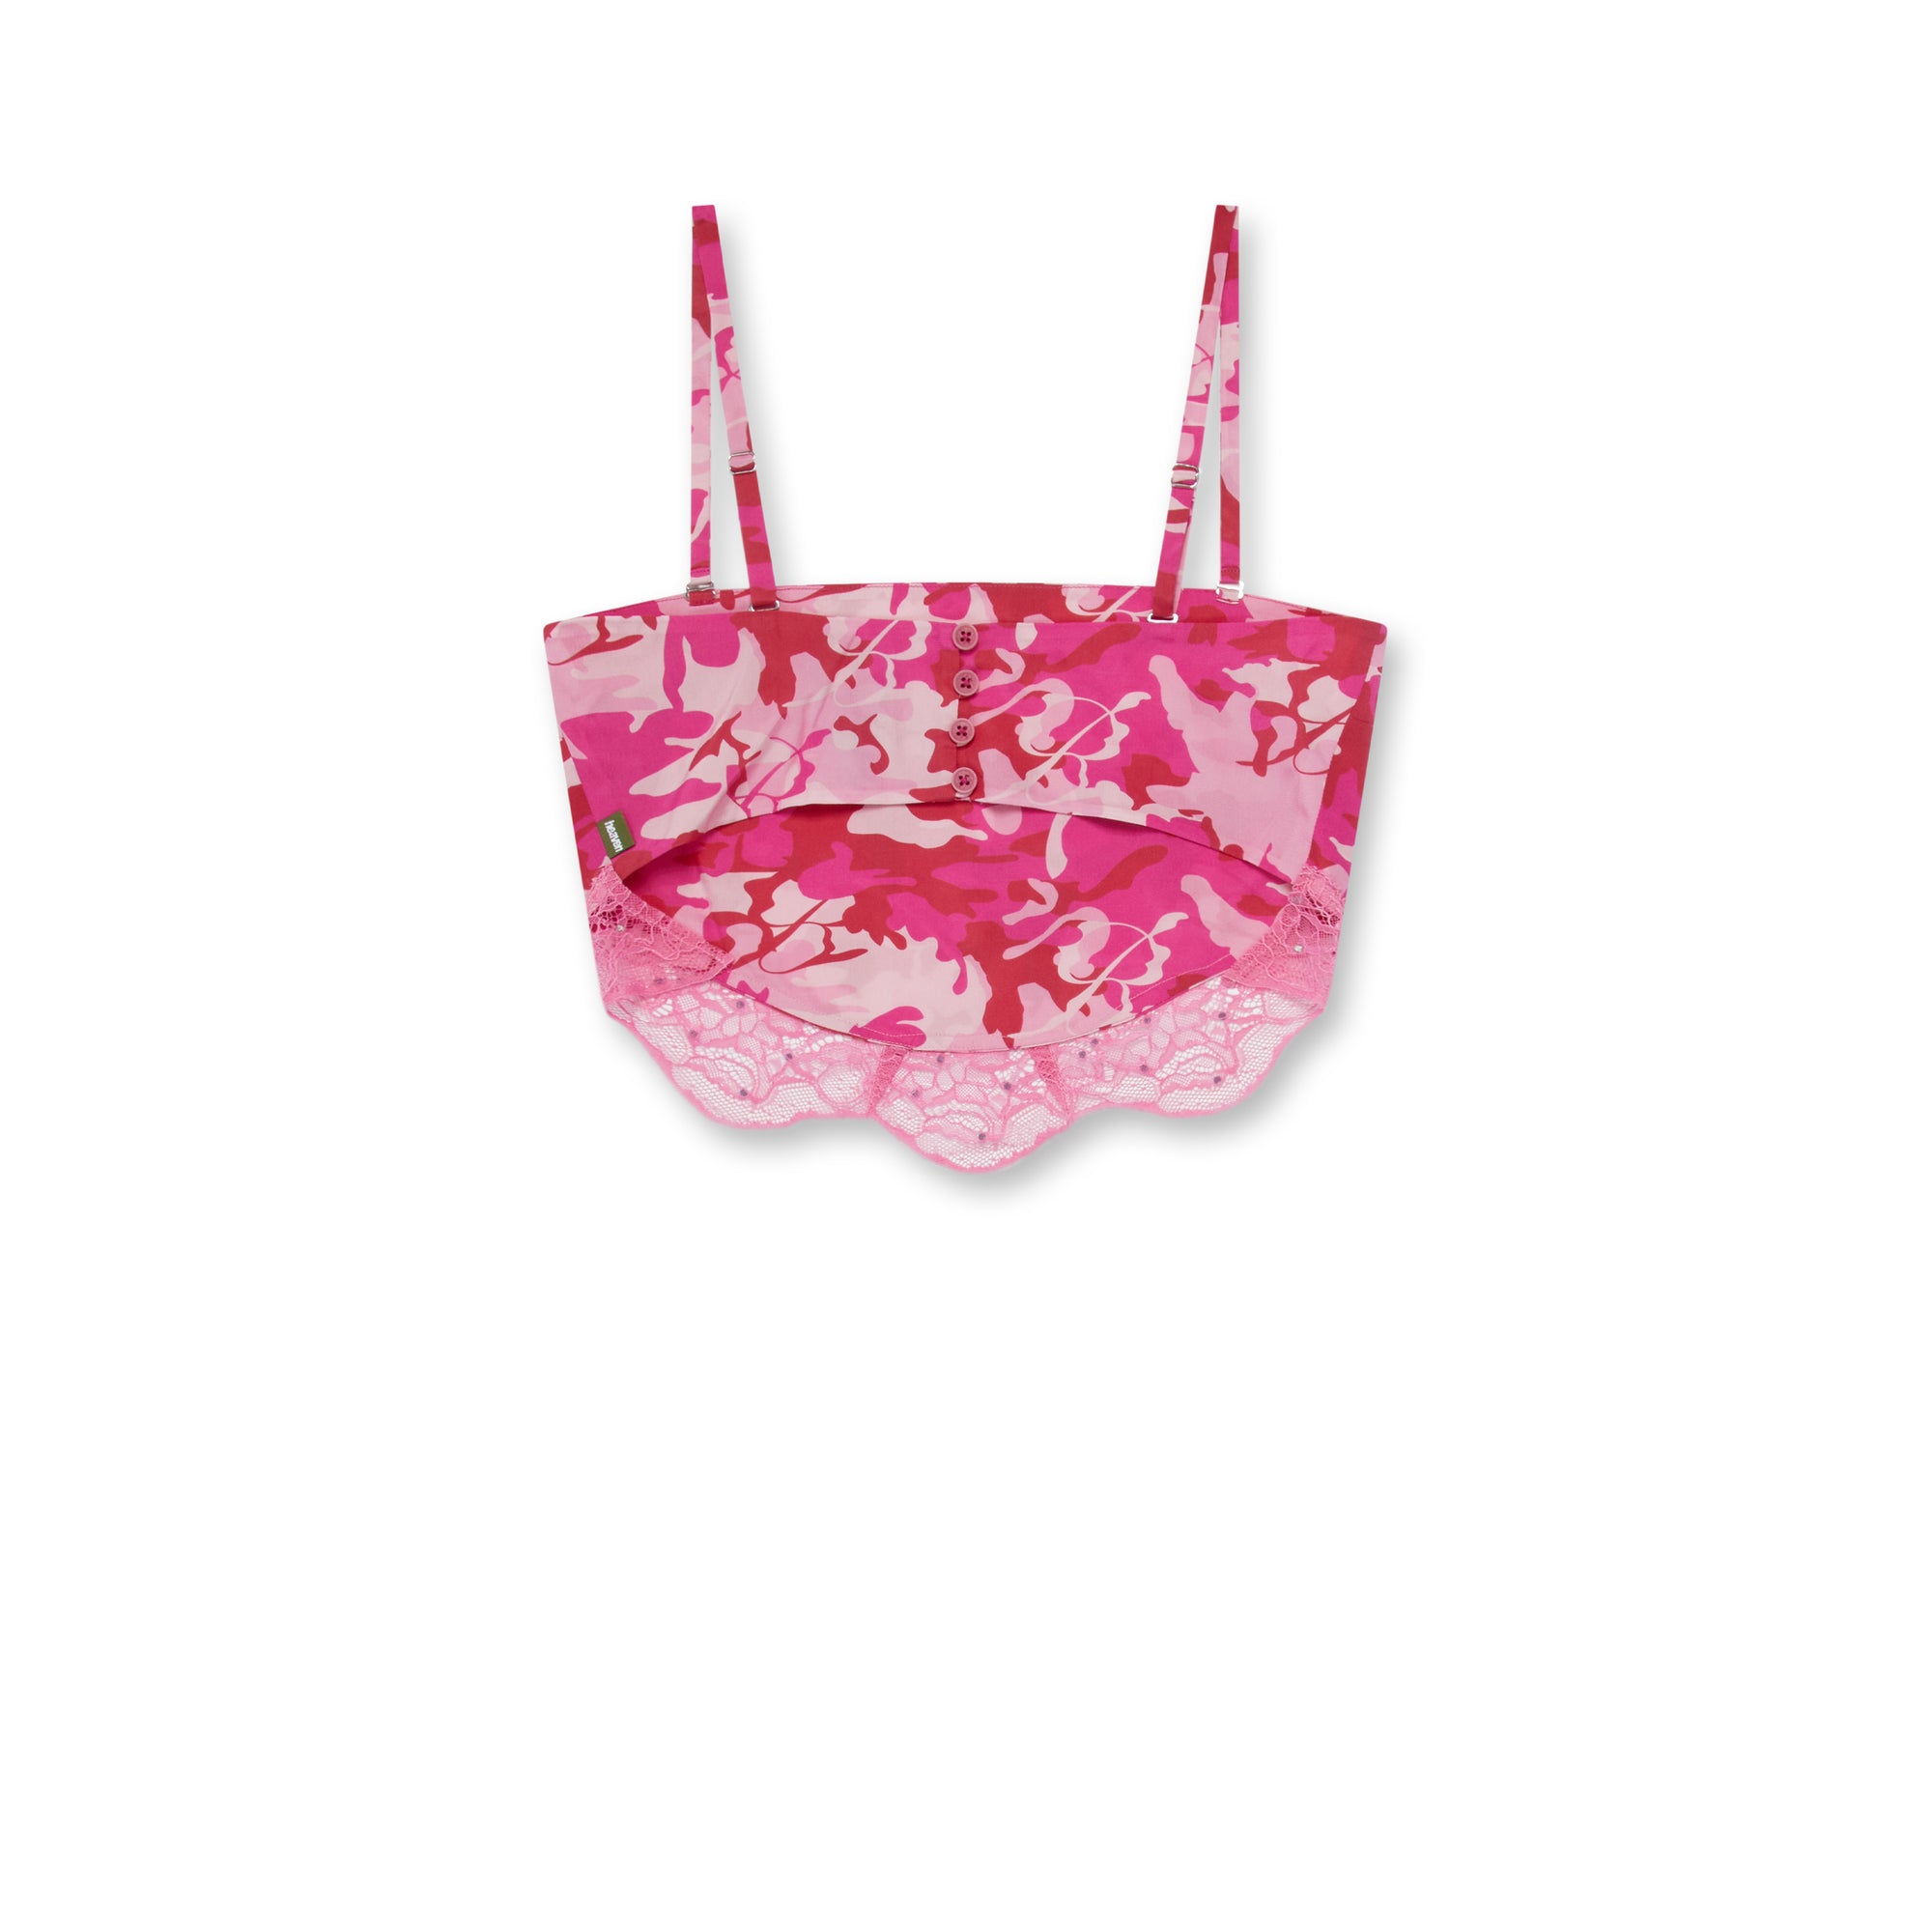 Blumarine by Marc Jacobs - Women’s Pink Camo Bandana Lace Top - (Pink Multi) view 2